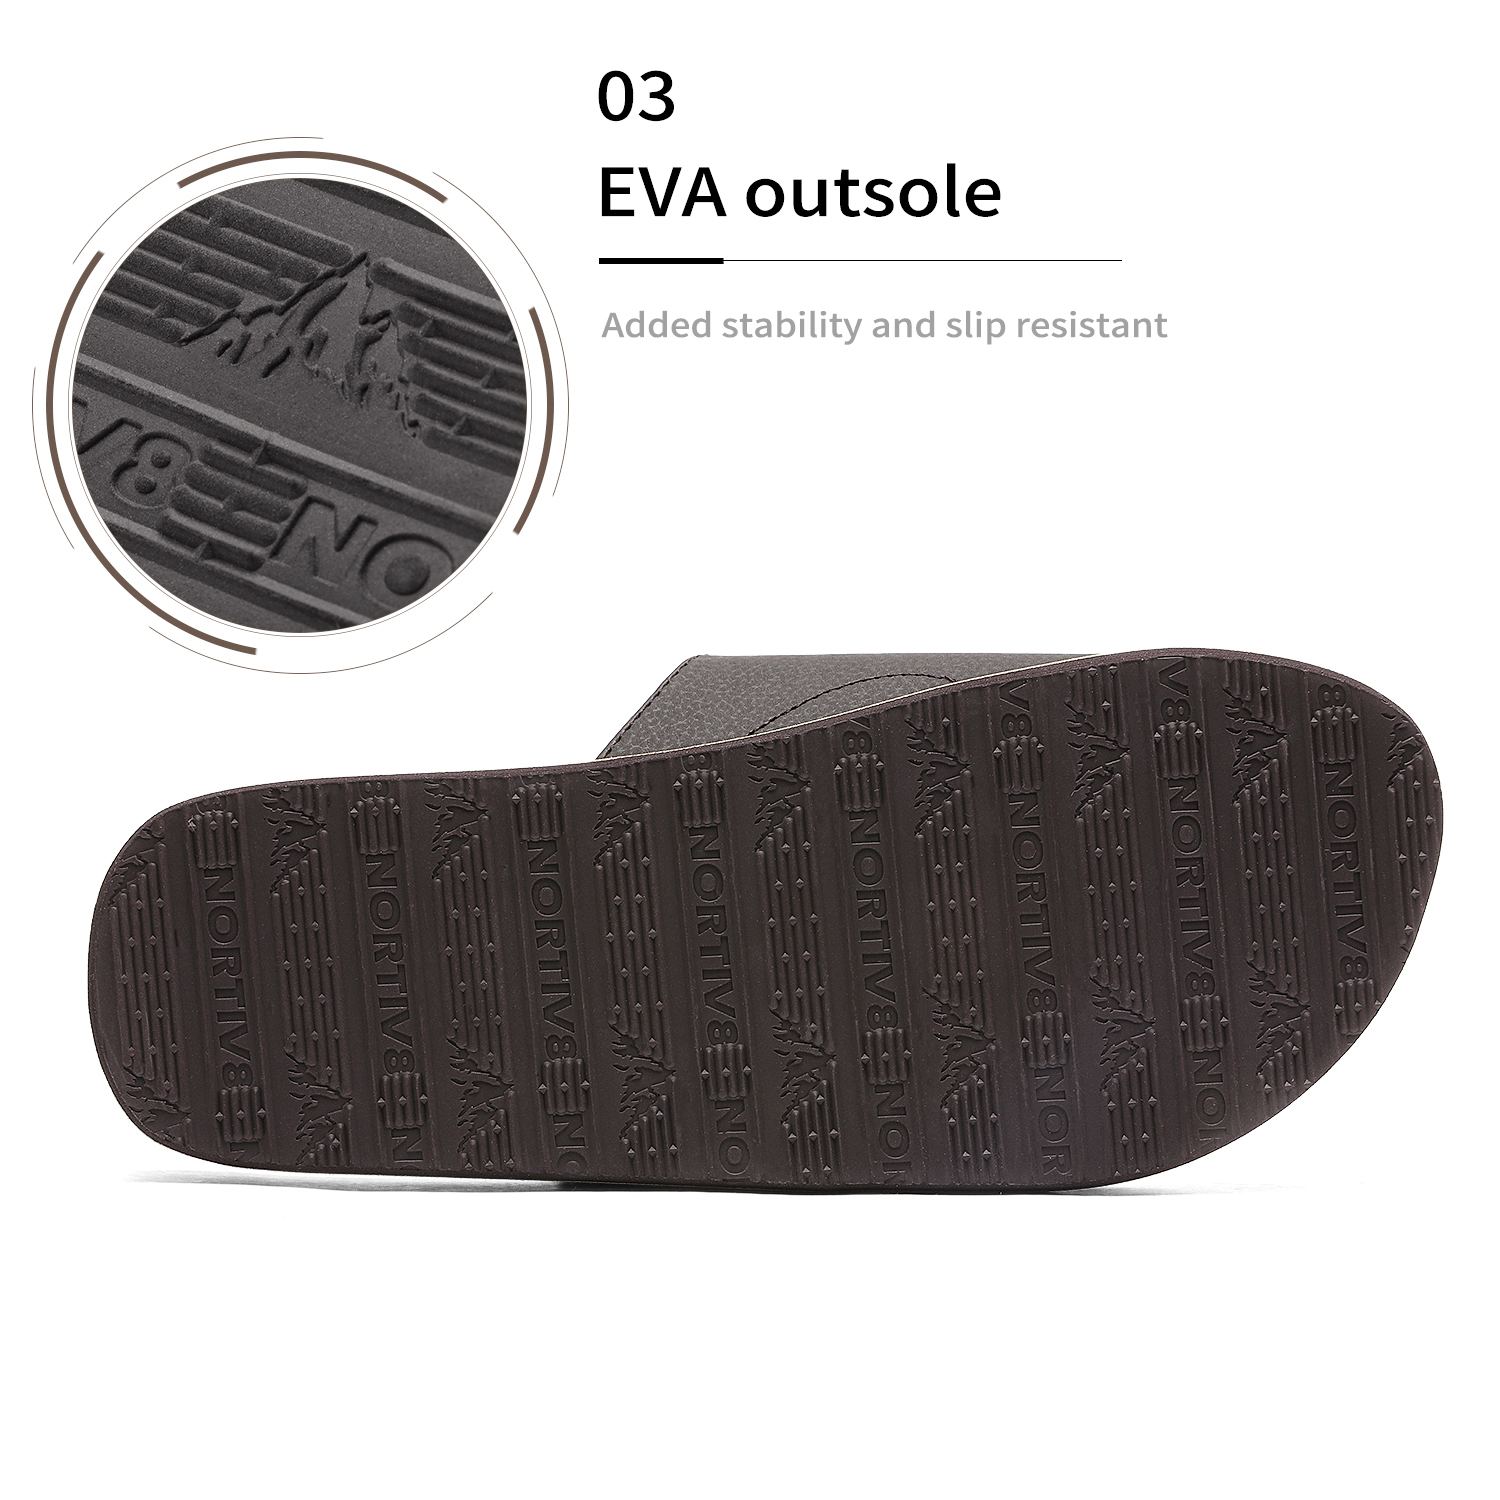 Nortiv 8 Men's Memory Foam Adjustable Slide Sandals Comfort Lightweight Beach Shoes Summer Outdoor Slipper Fusion Dark/Brown Size 8 - image 3 of 5